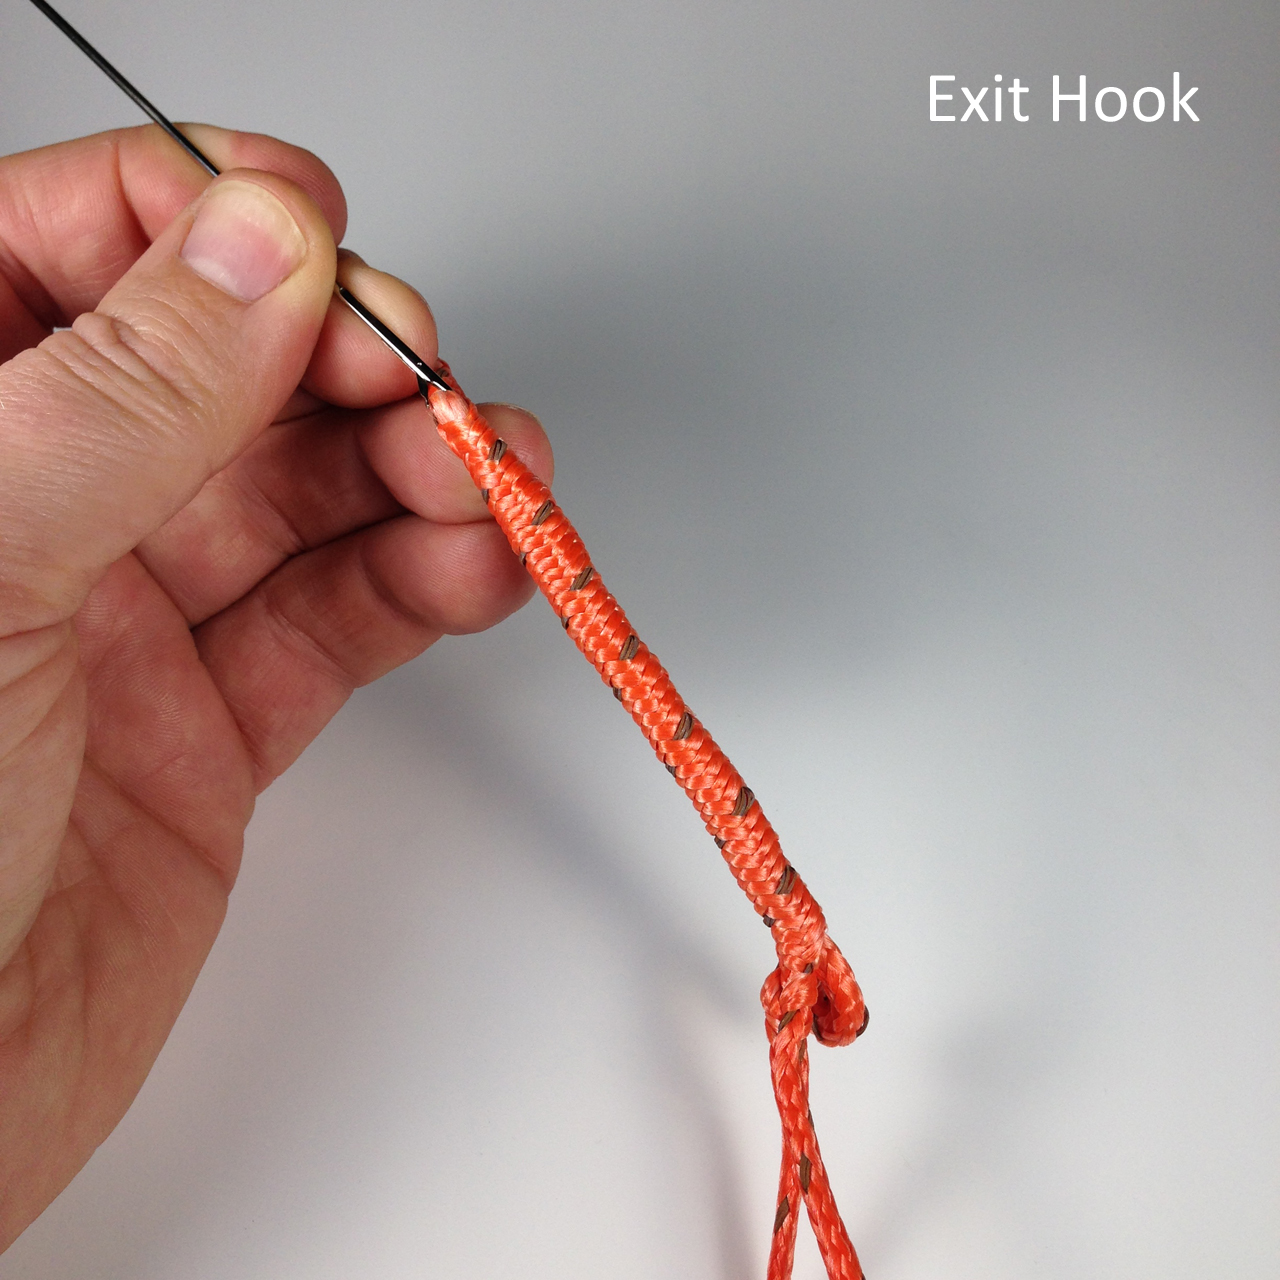 splicing-hook-10-exit-hook.jpg